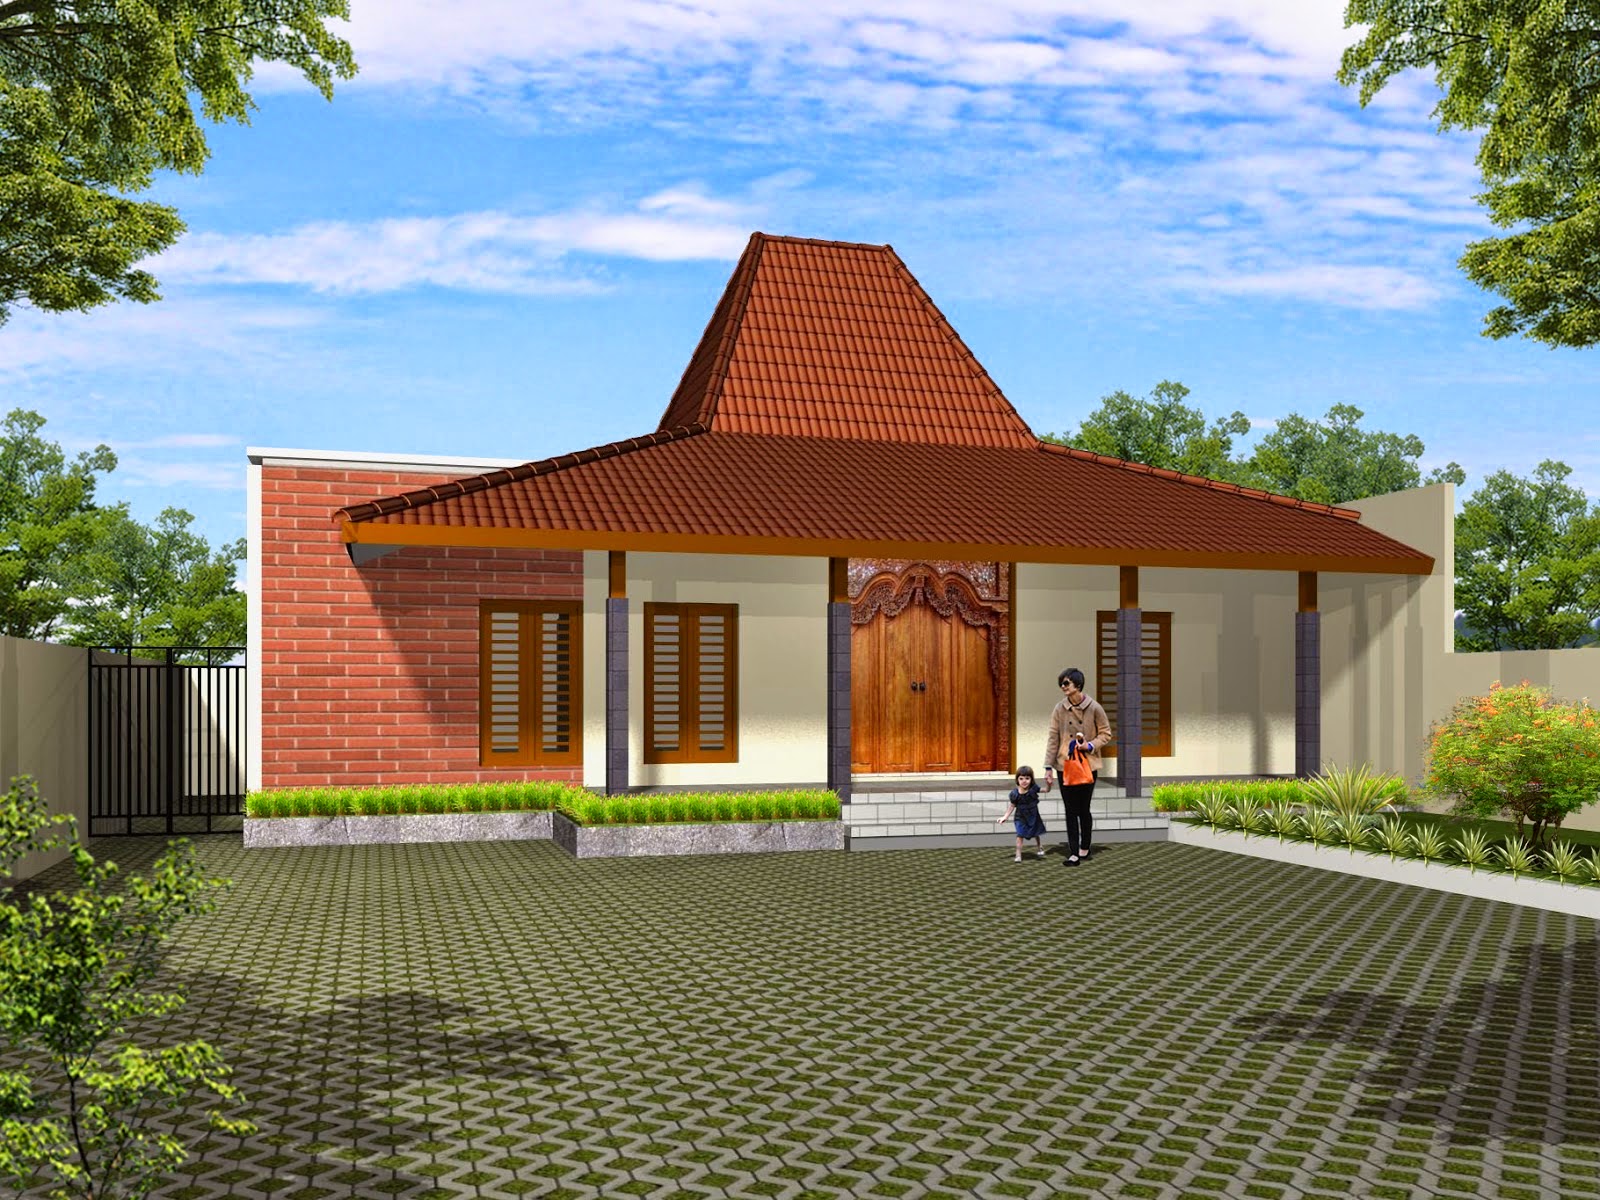 45 Desain Rumah Joglo Khas Jawa Tengah Pekanbaru Interior